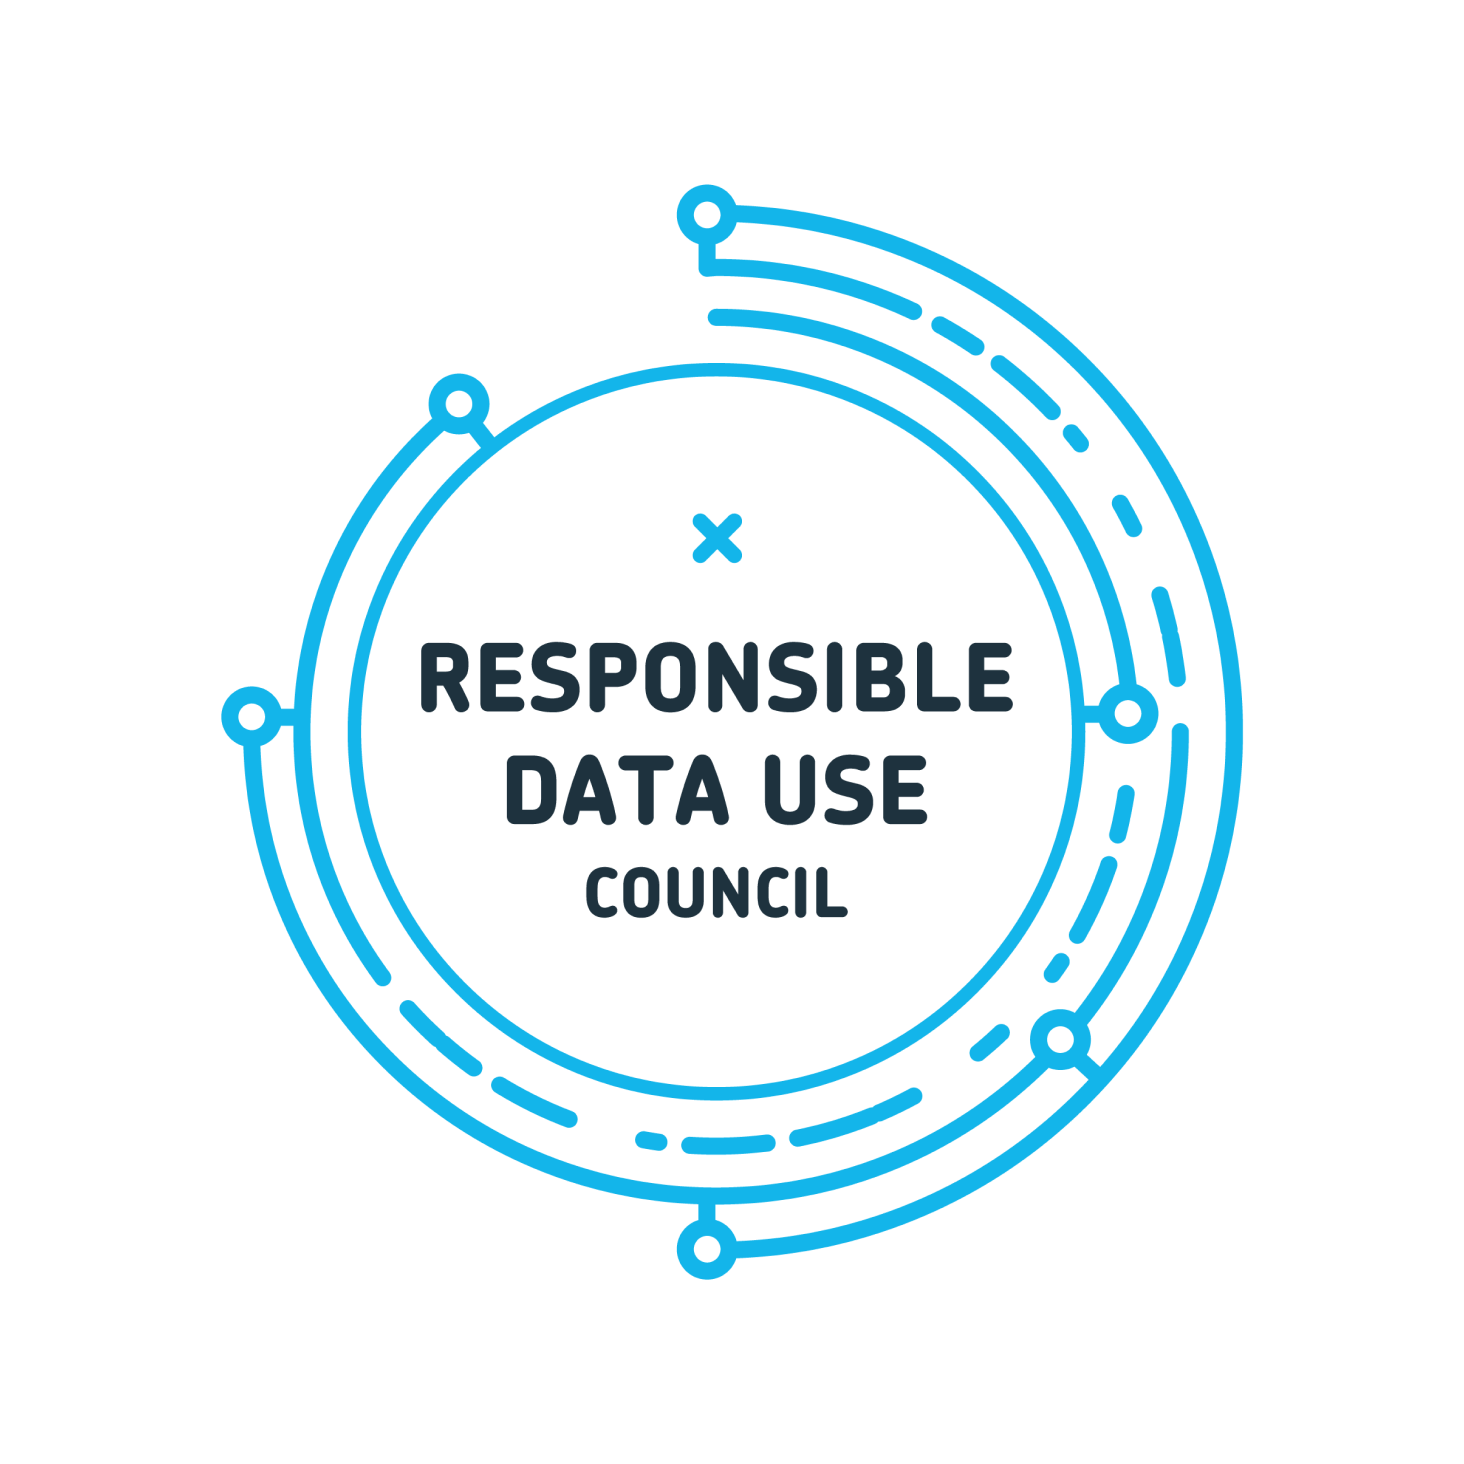 Responsible data use advisory council logo